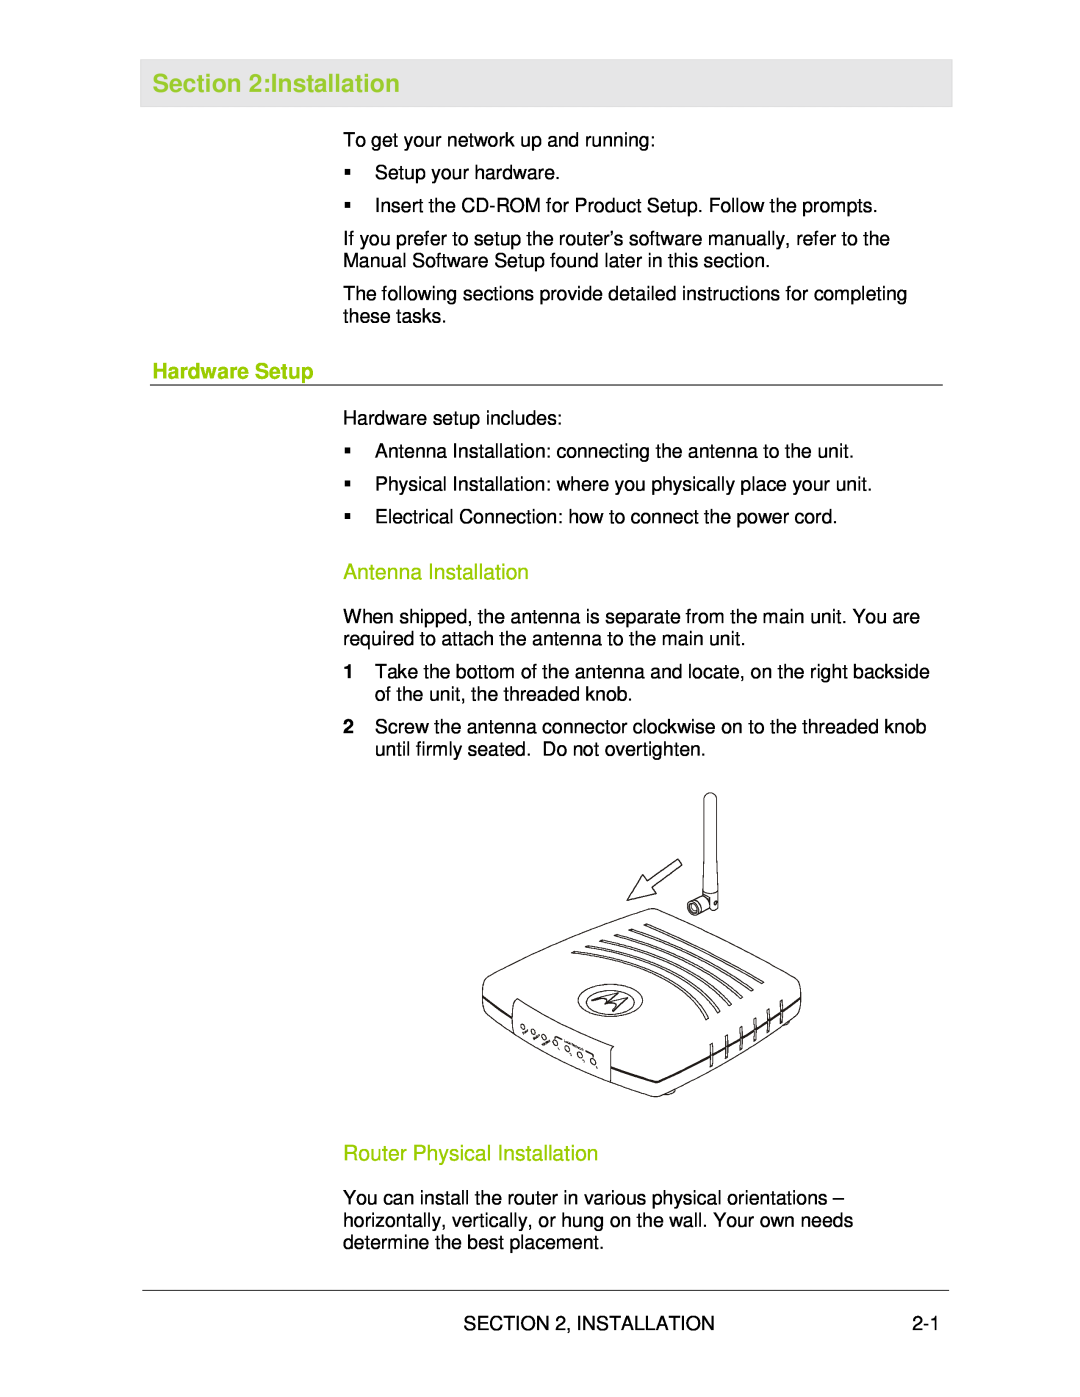 Motorola WR850G manual Hardware Setup, Antenna Installation, Router Physical Installation 